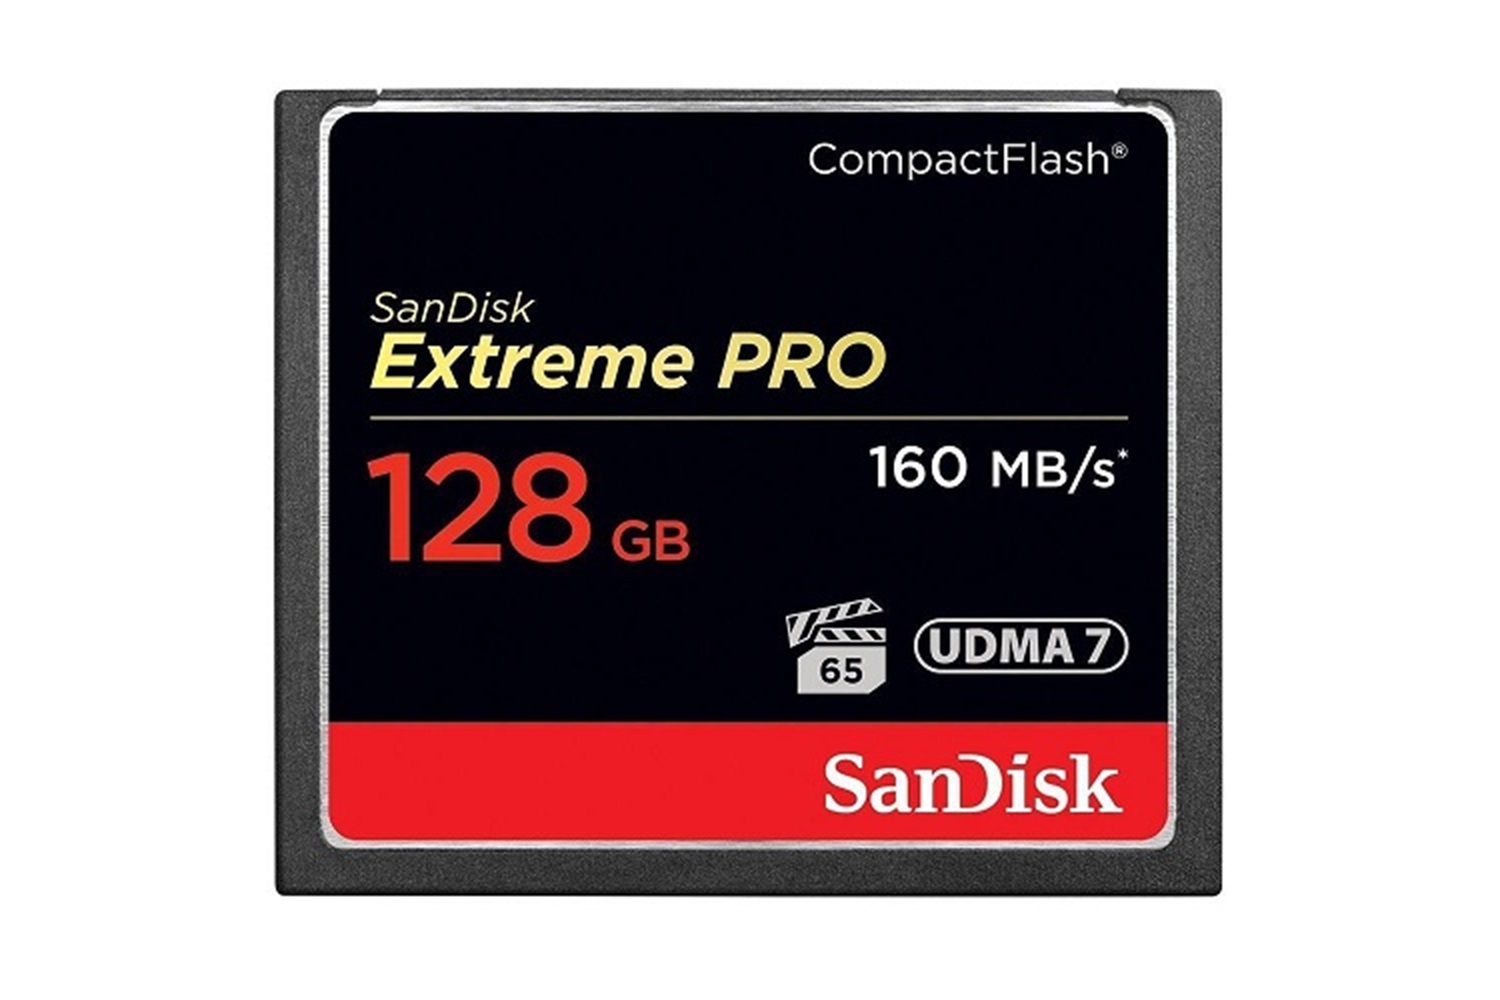 Sandisk Extreme Pro 128 GB 4K CF Compact Flash Hafıza Kartı 160mb/s